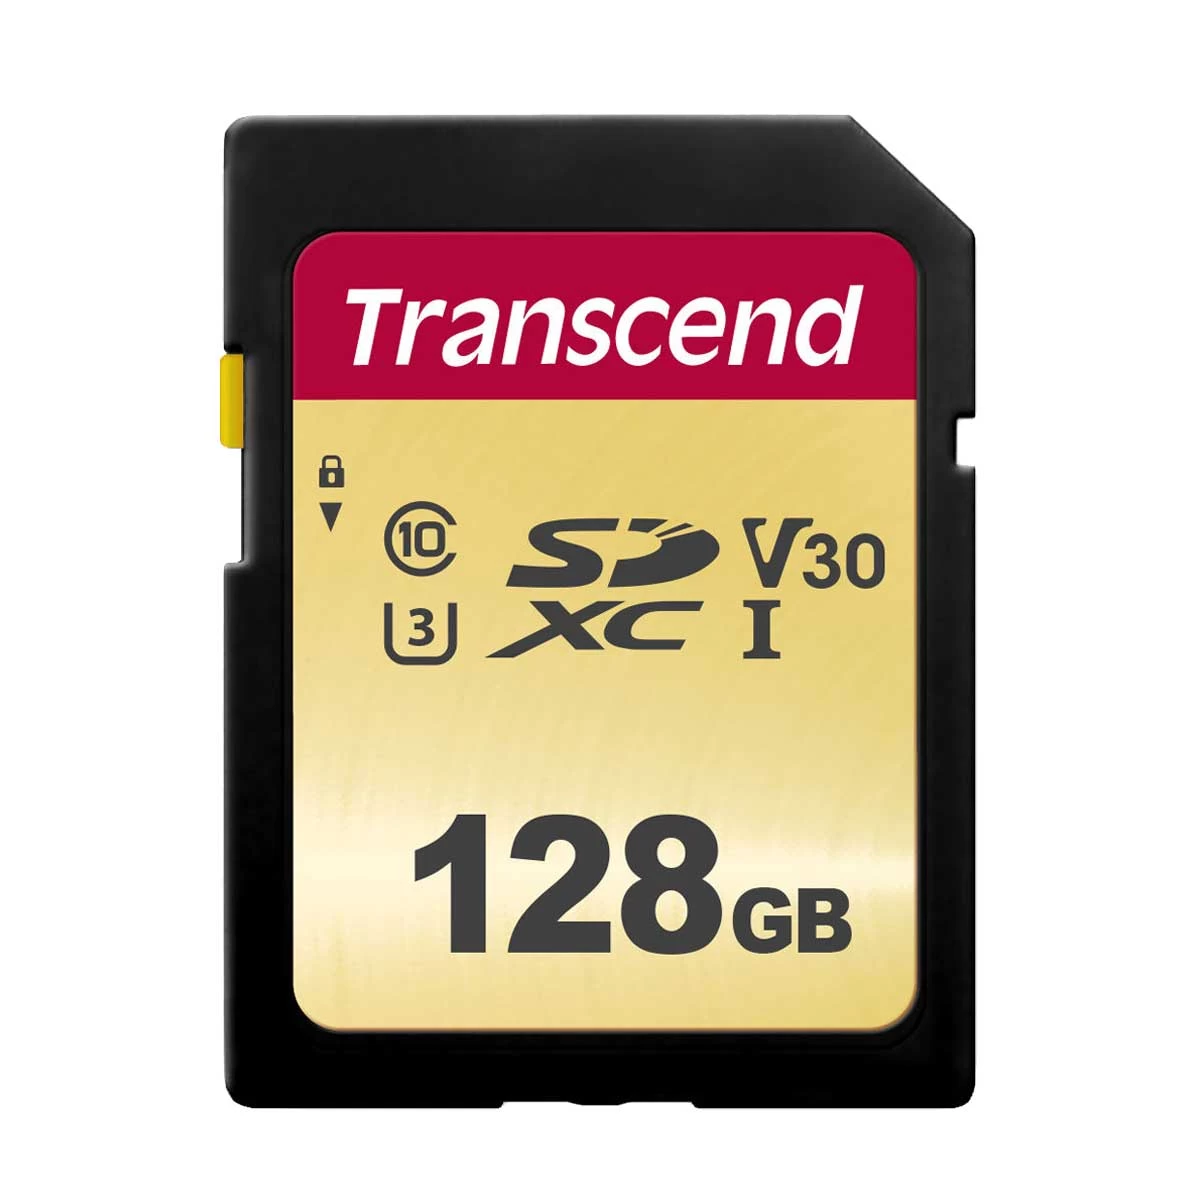 Transcend SDXC/SDHC 500S 128GB Class 10 UHS-I U3, V30 SD Card #TS128GSDC500S